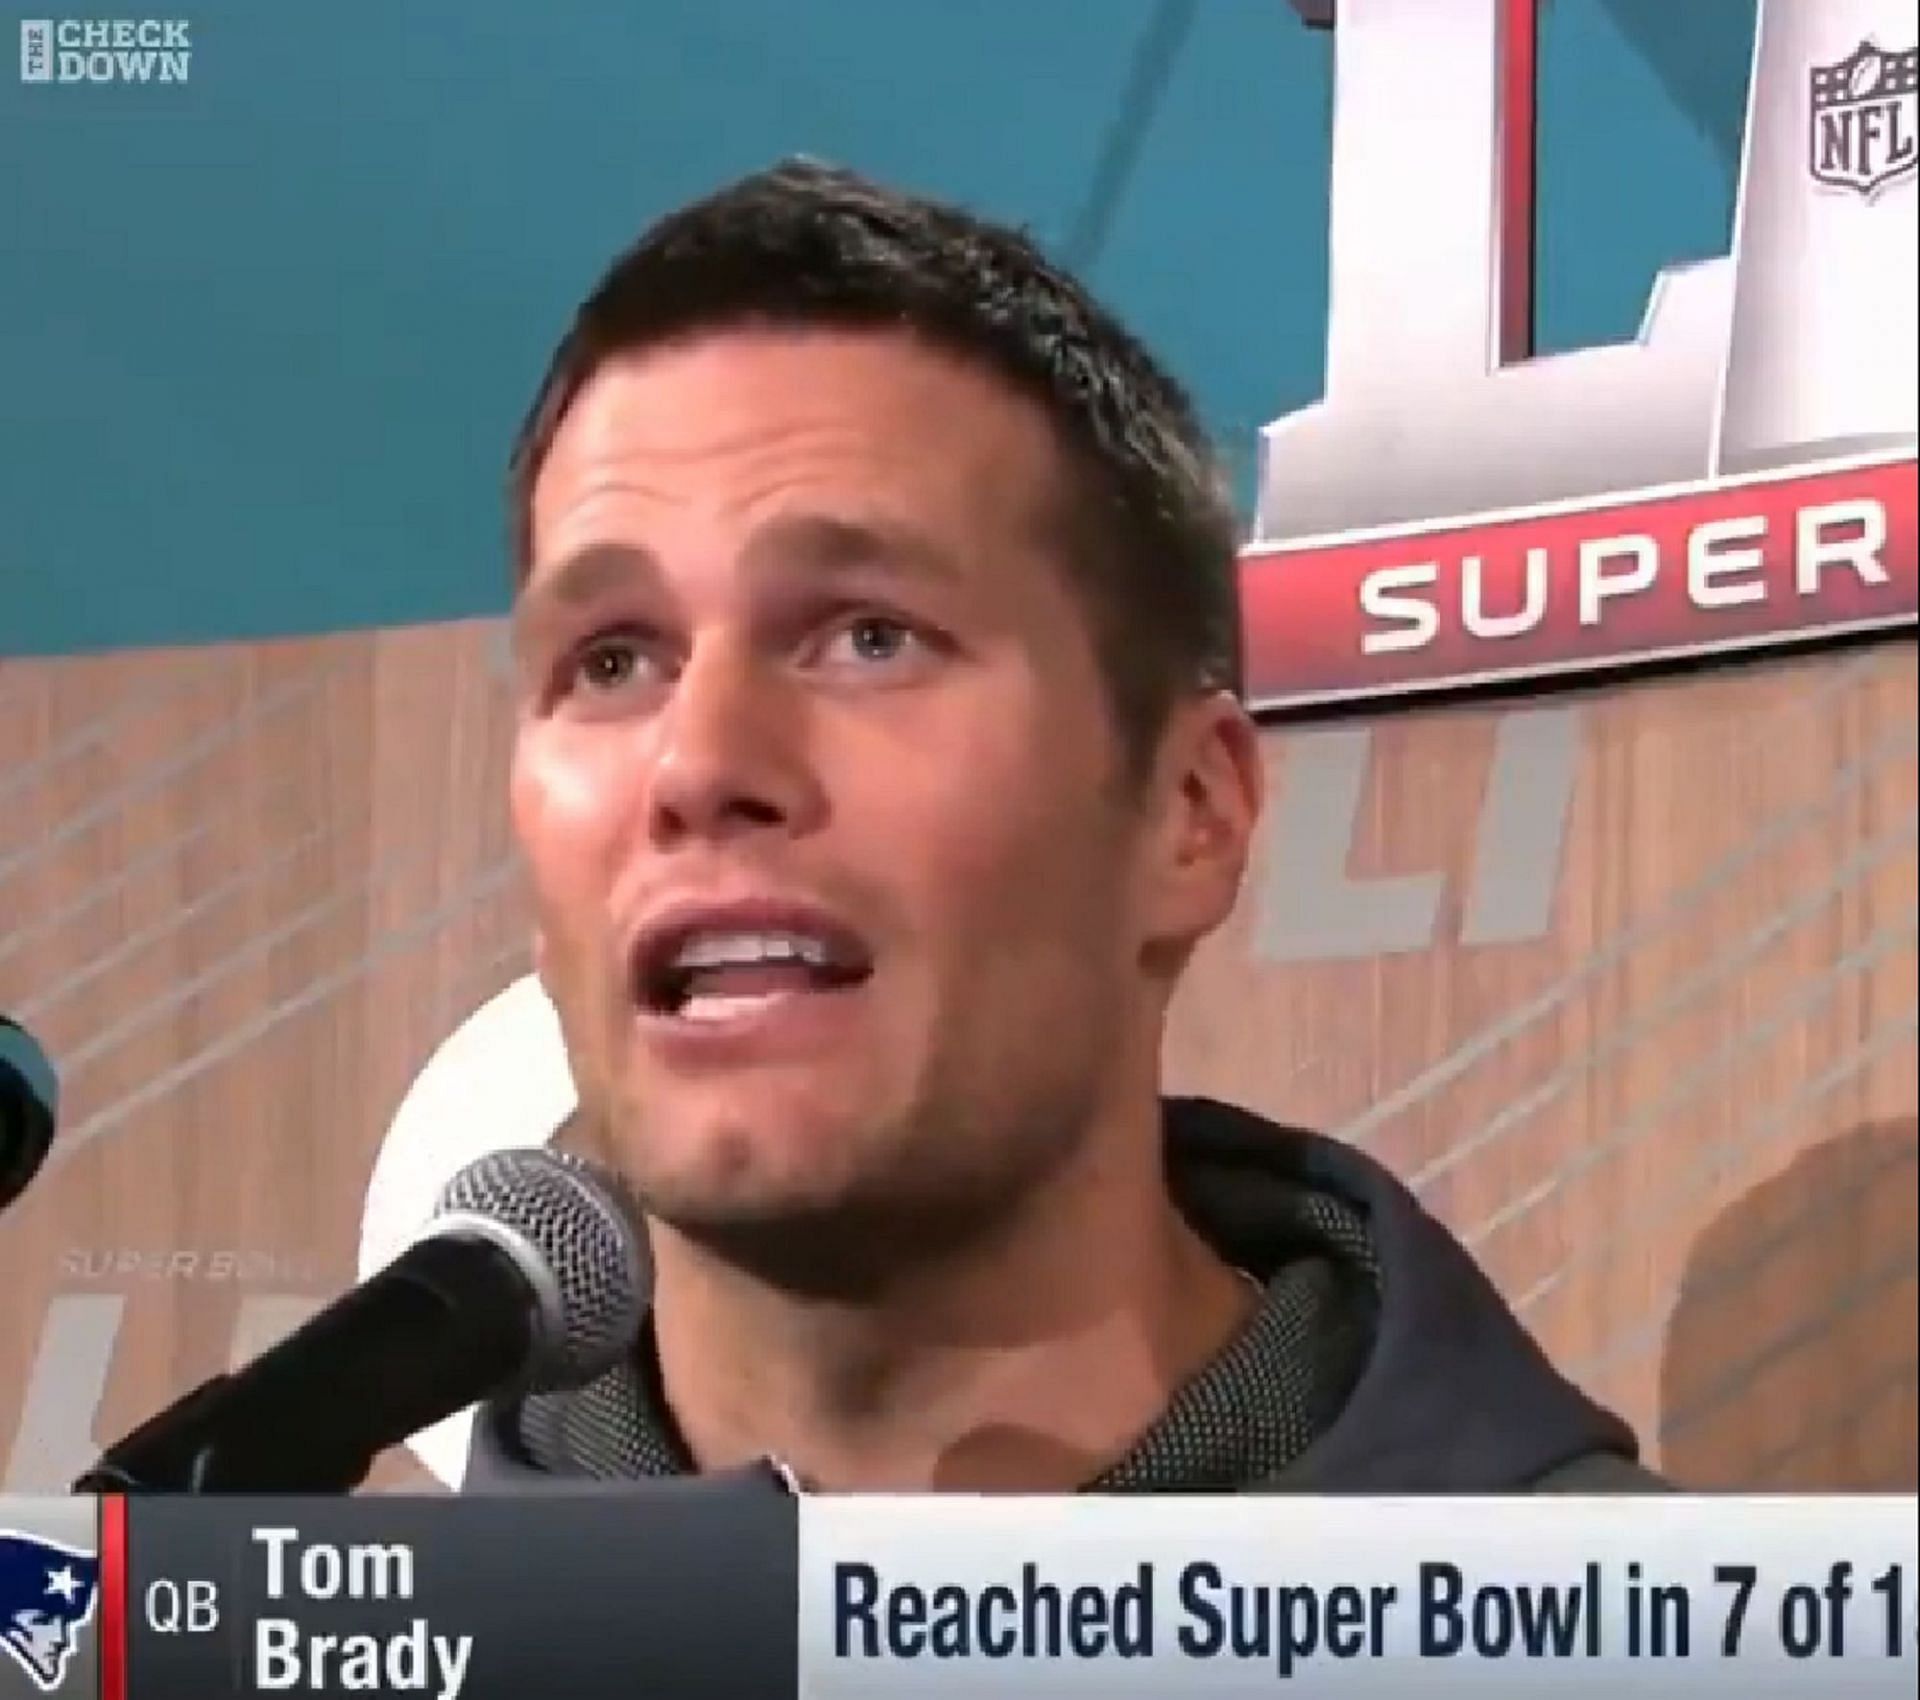 Tom Brady at Super Bowl media week 2017 Credit: Bleacher Report and @itskylecovers on Twitter